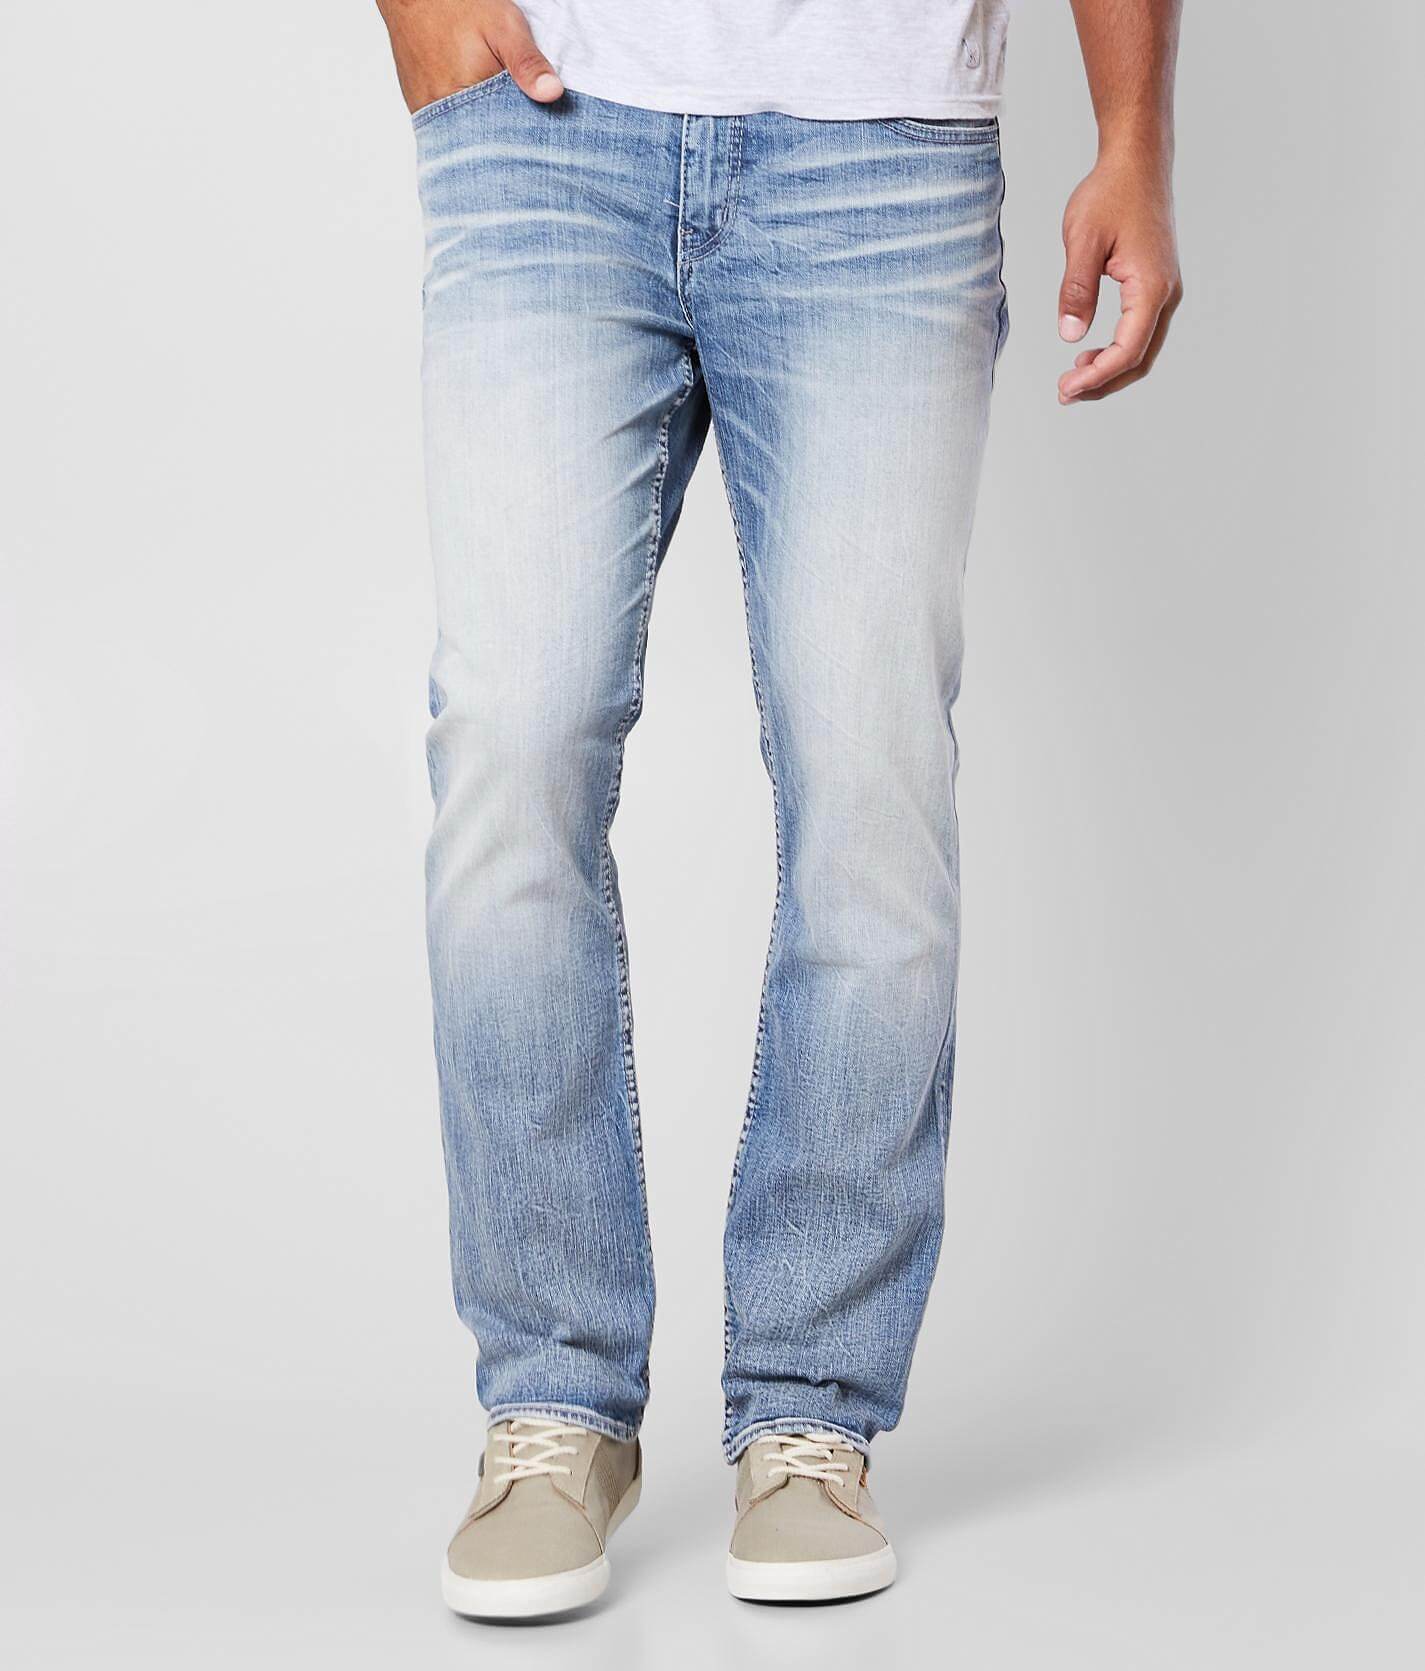 buckle jake straight jeans